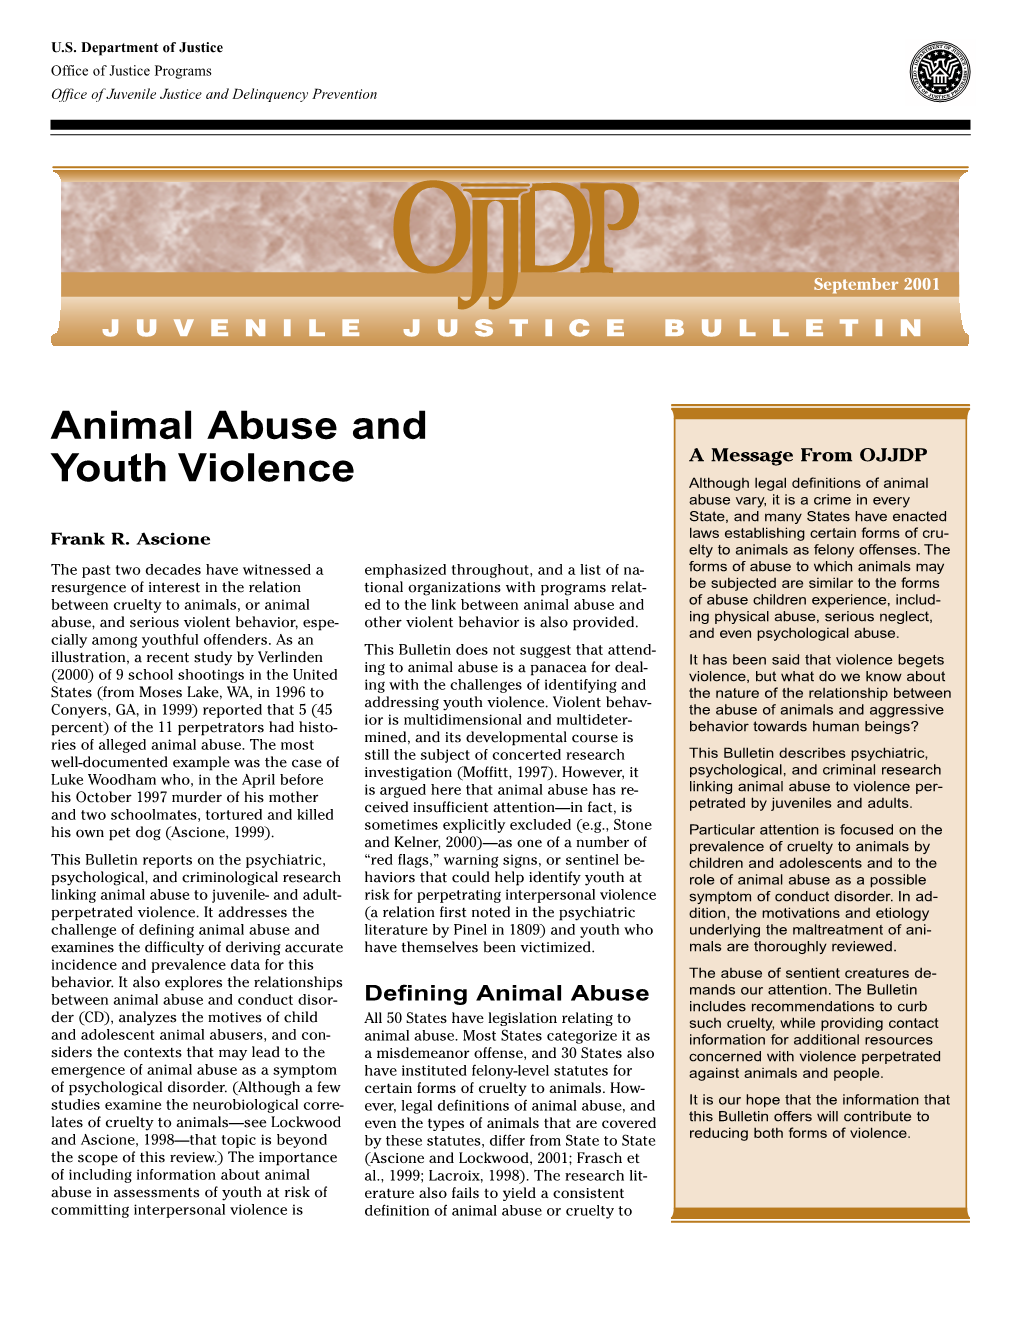 Animal Abuse and Youth Violence